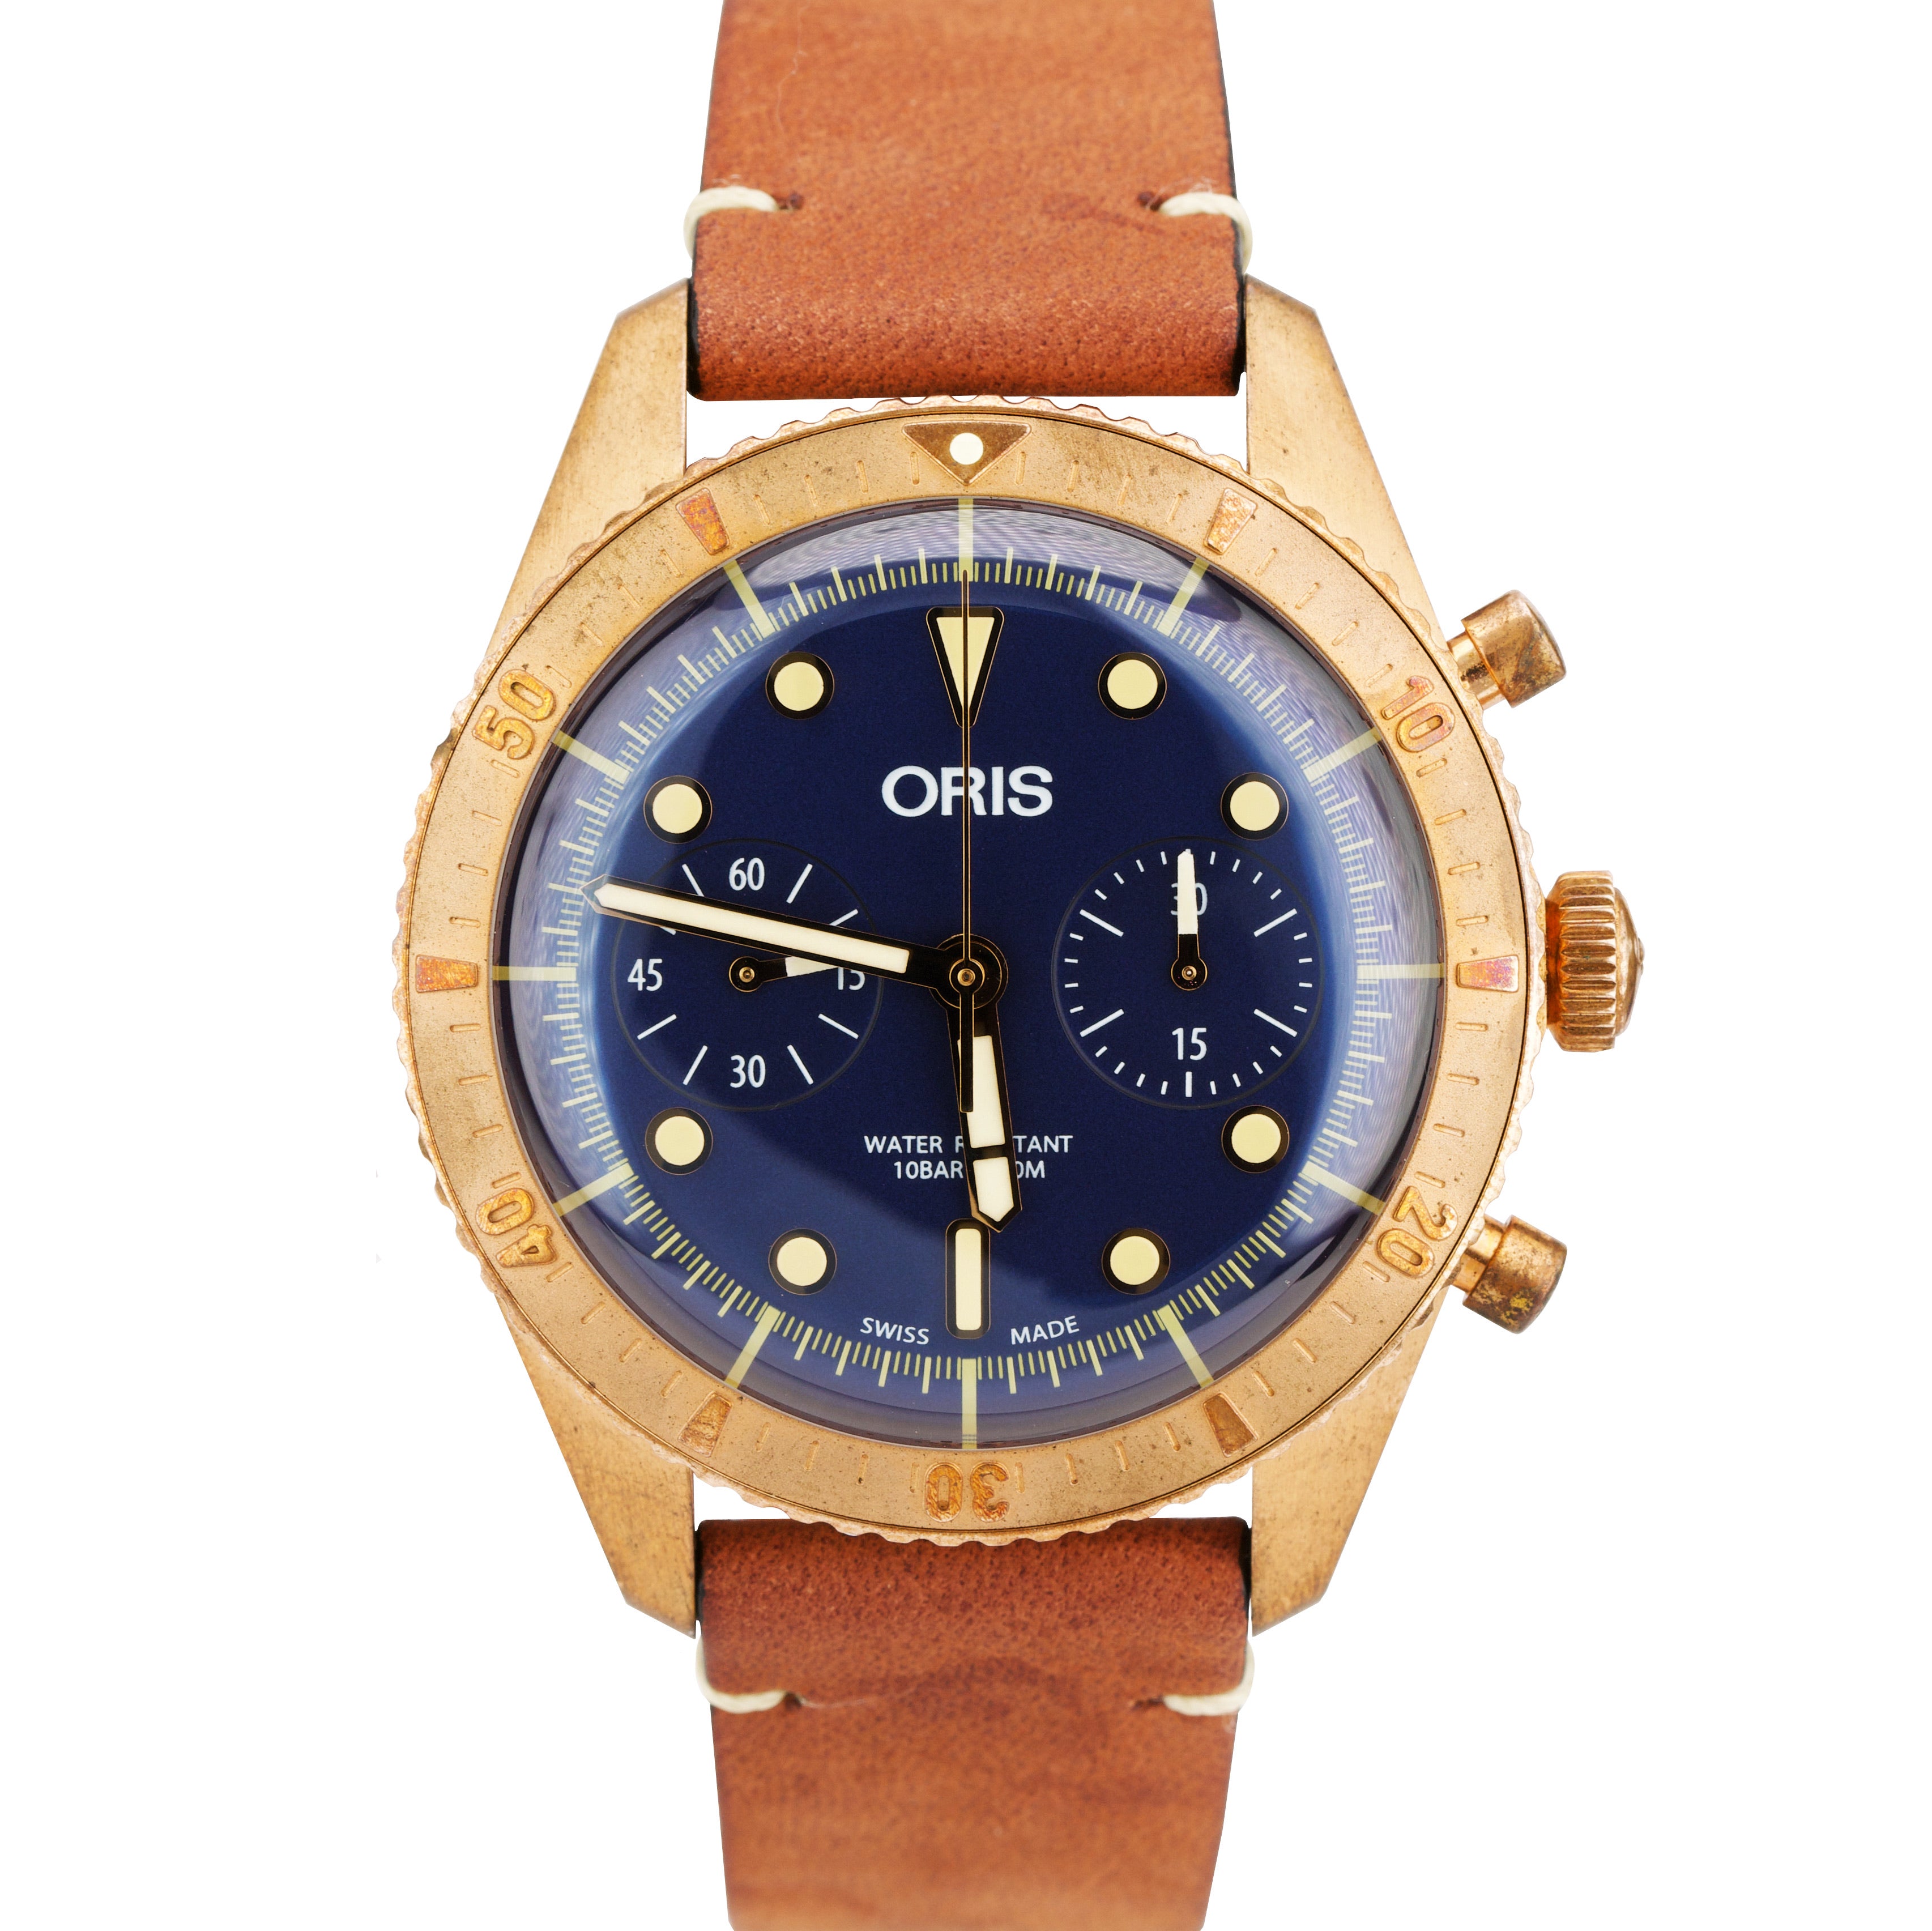 Oris Carl Brashear Limited Edition 43mm Chrono Bronze Watch 01 771 7744 3185